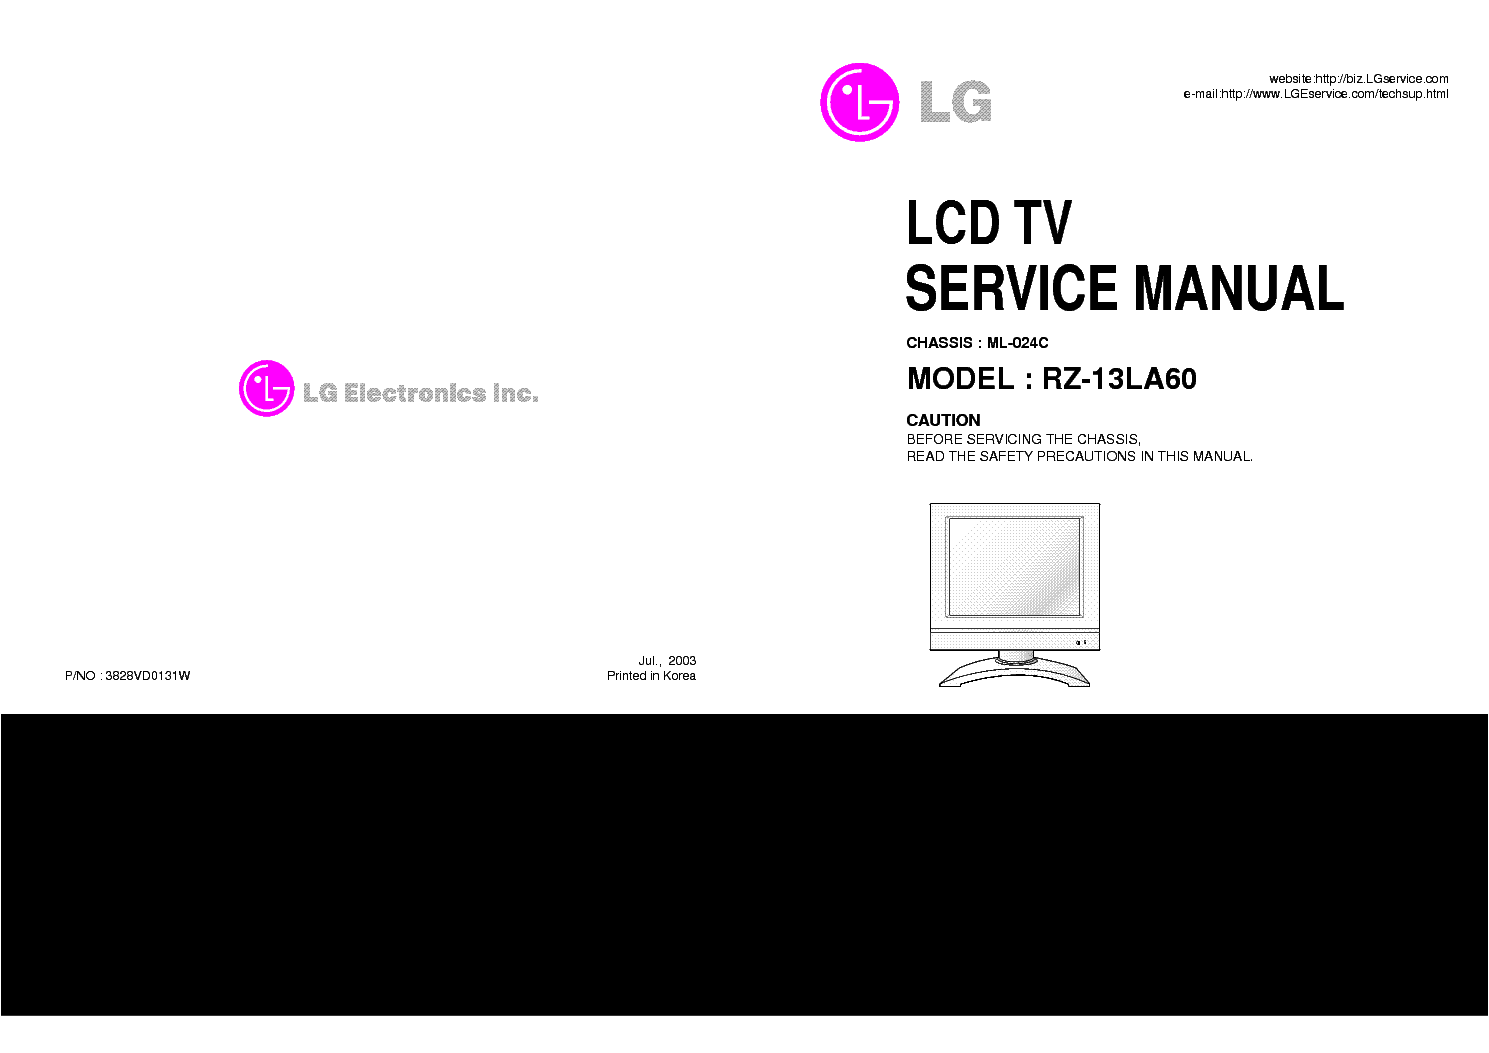 LG RZ-13LA60 CHASSIS MC-024C SM service manual (1st page)